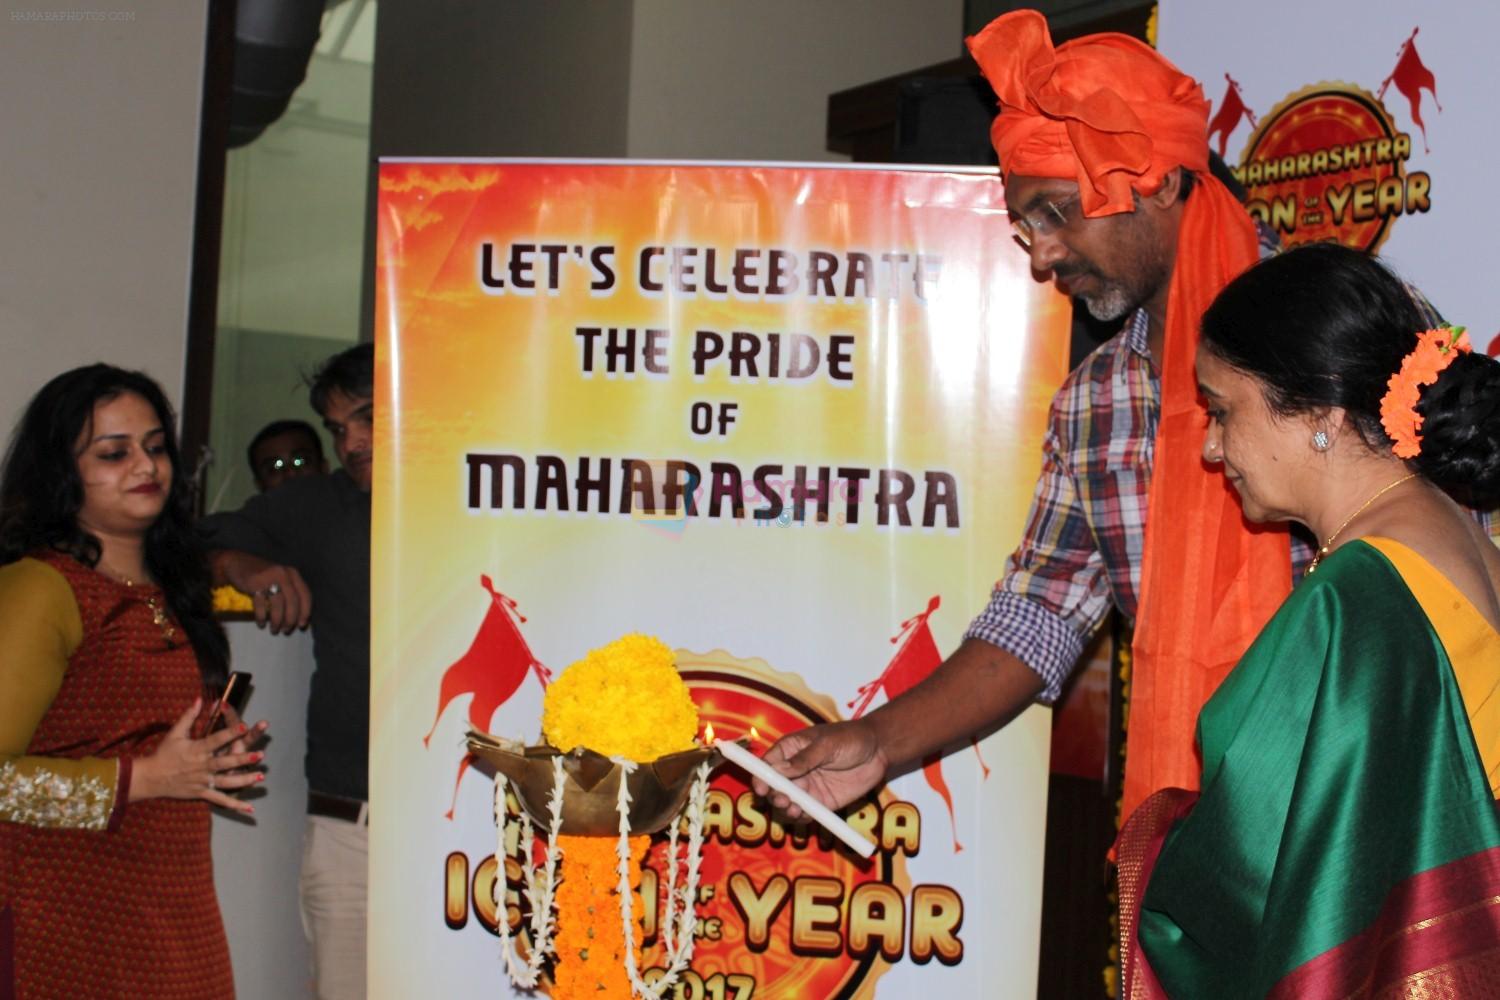 Nagraj Manjule Felcitated With Maharashtra Icon Award With Maharashtra Day Celebration on 27th April 2017